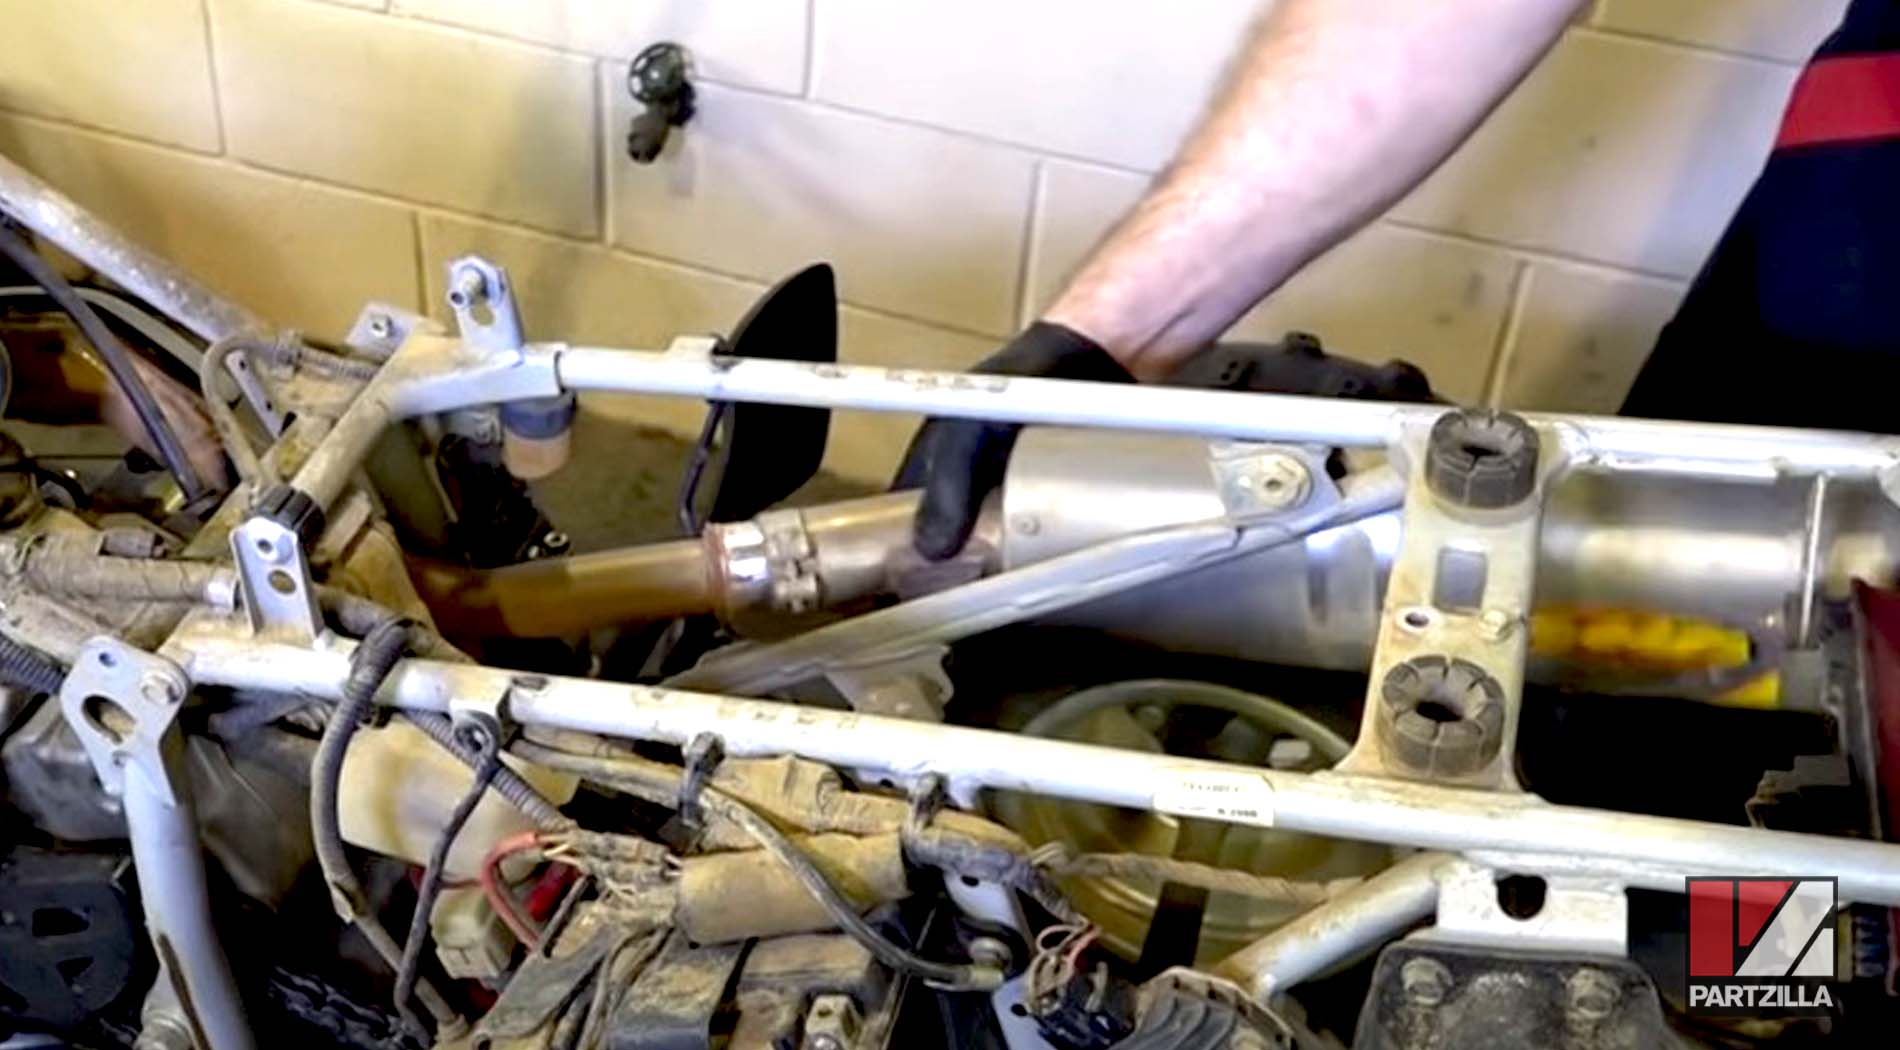 Honda TRX 400 top end rebuild exhaust pipe